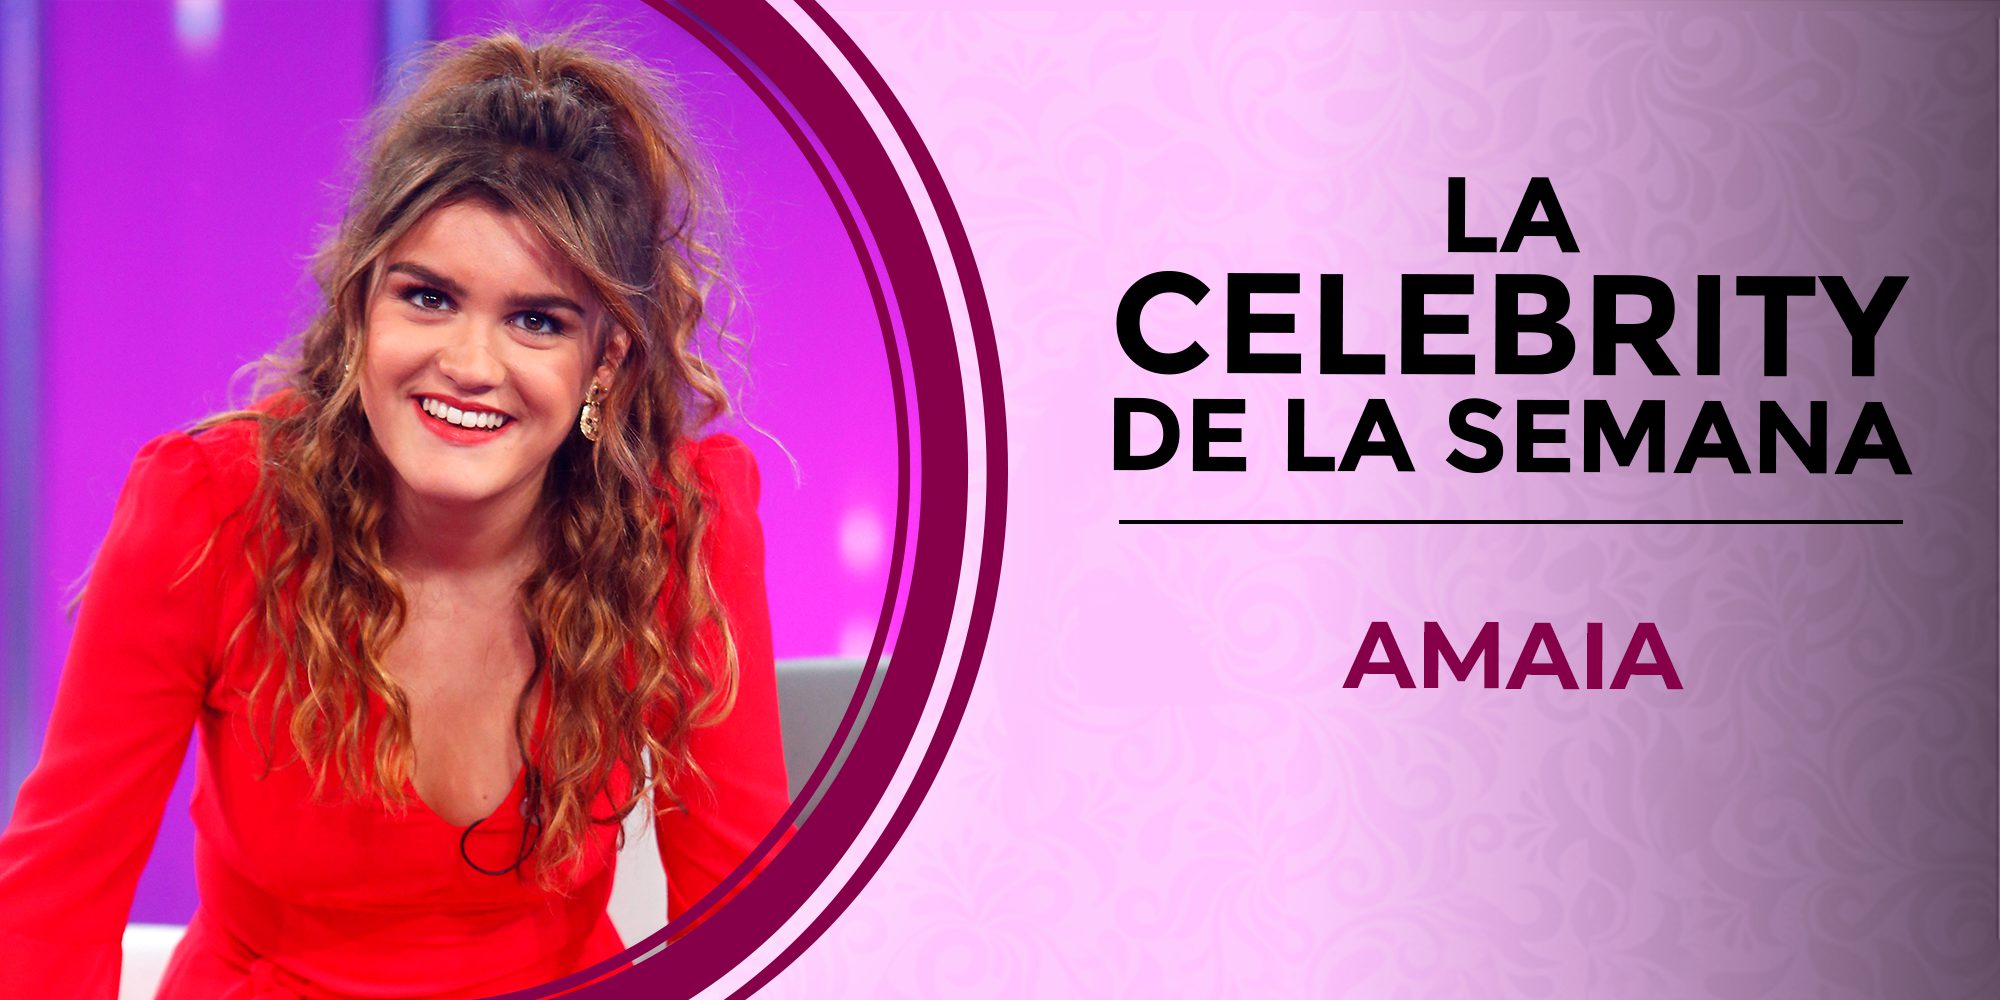 Amaia Romero se convierte en la celebrity de la semana por ser la flamante ganadora de 'OT 2017'